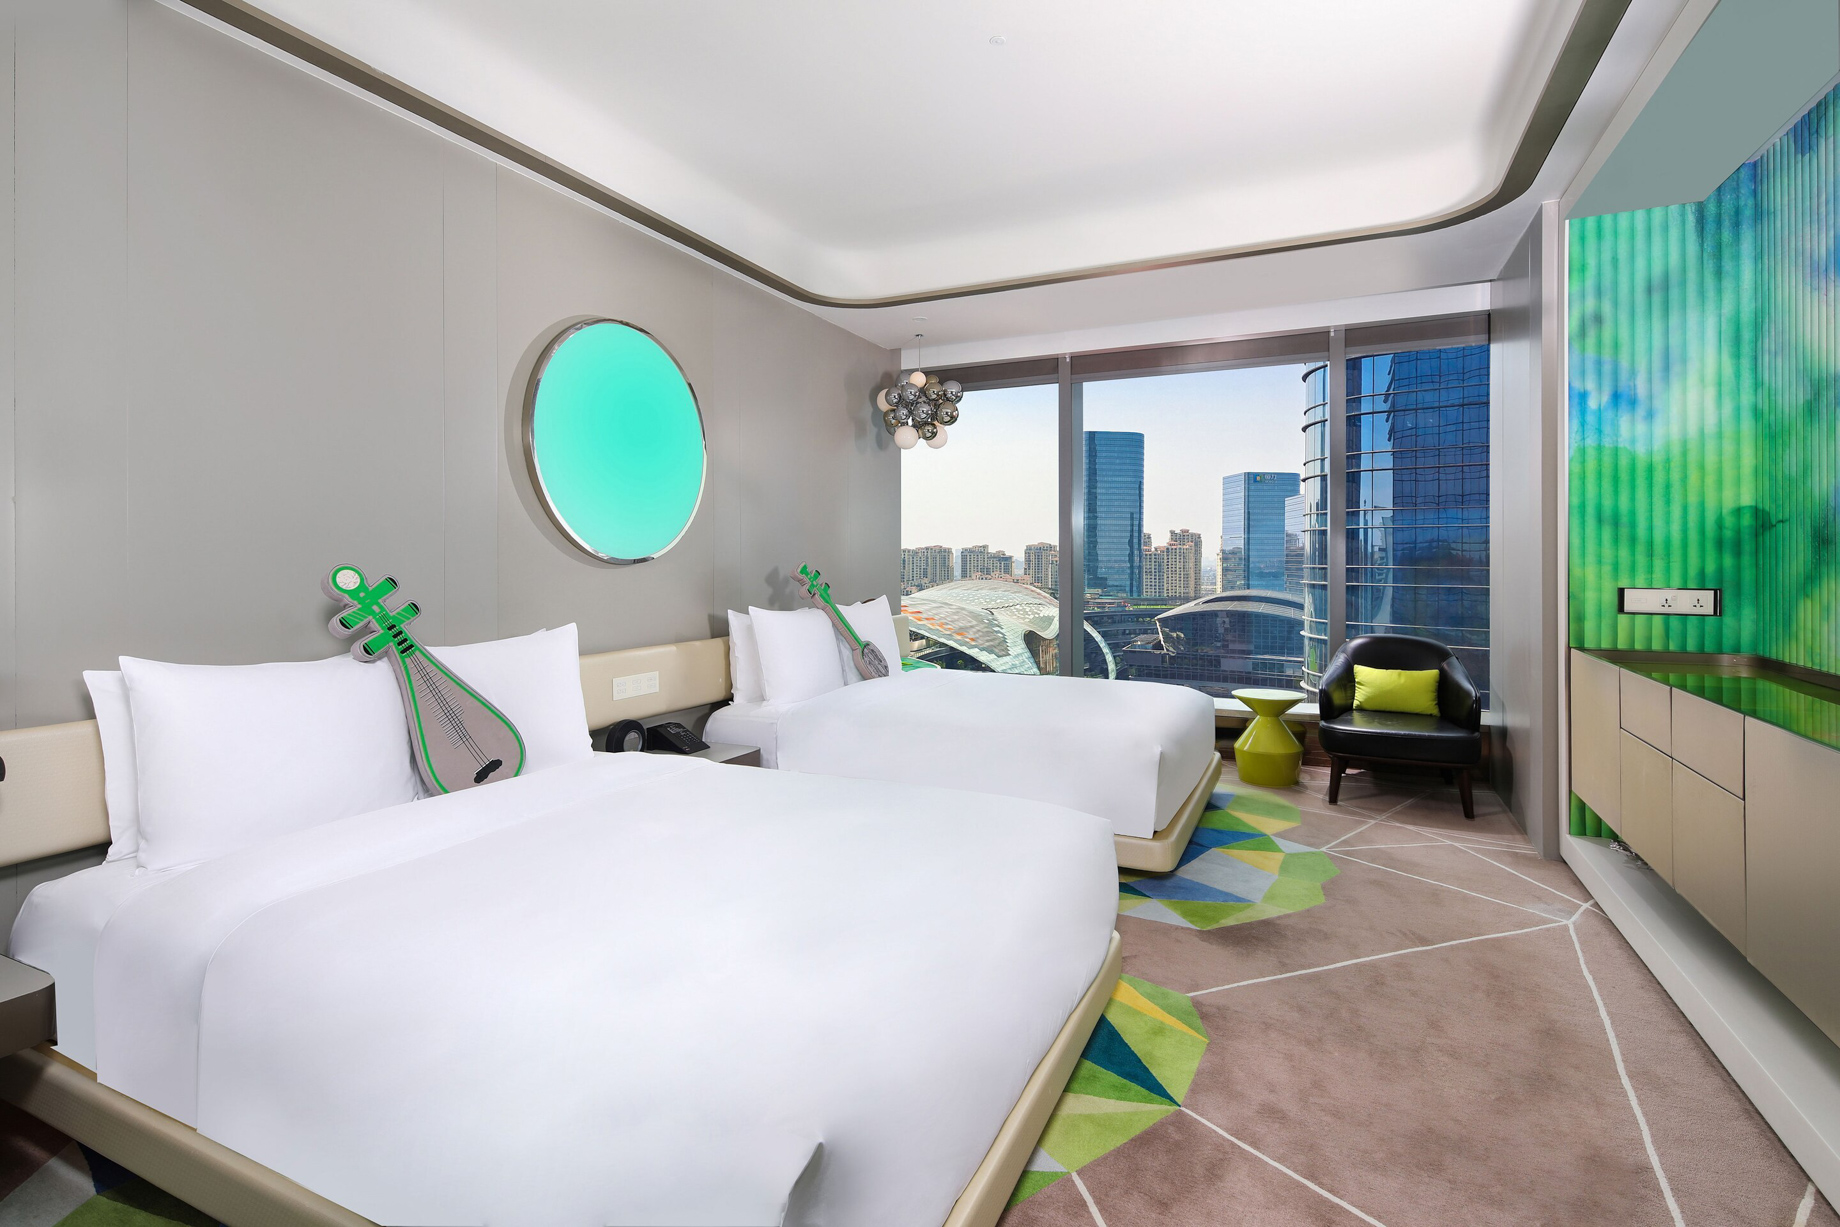 W Suzhou Hotel – Suzhou, China – Wonderful Room